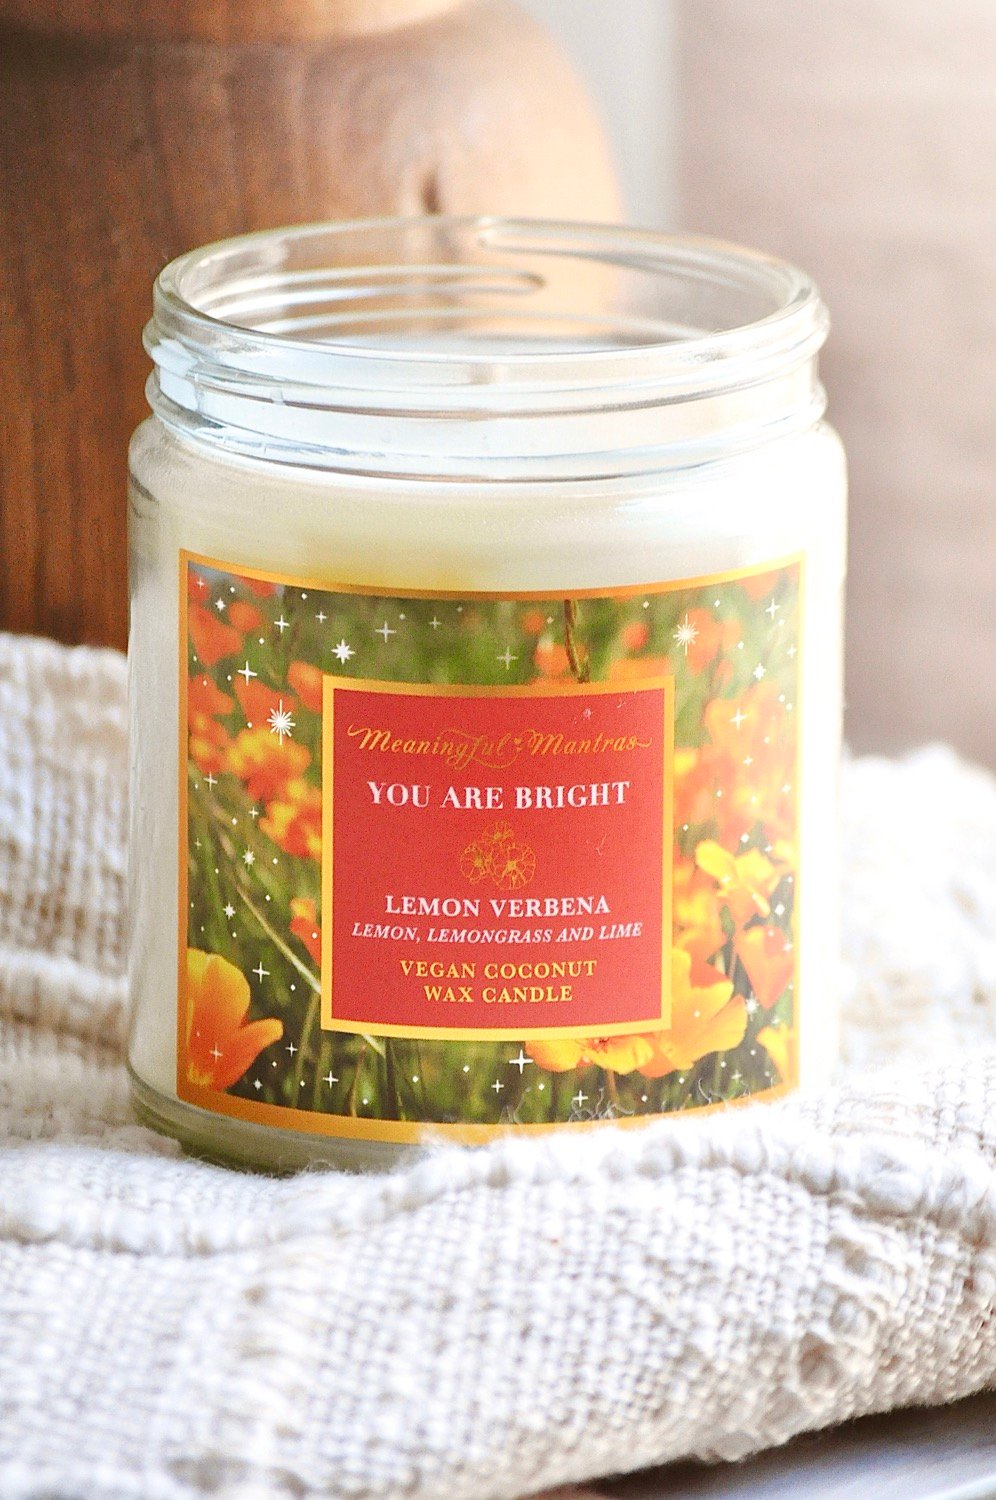 You Are Bright Lemon Verbena Aromatherapy Candle